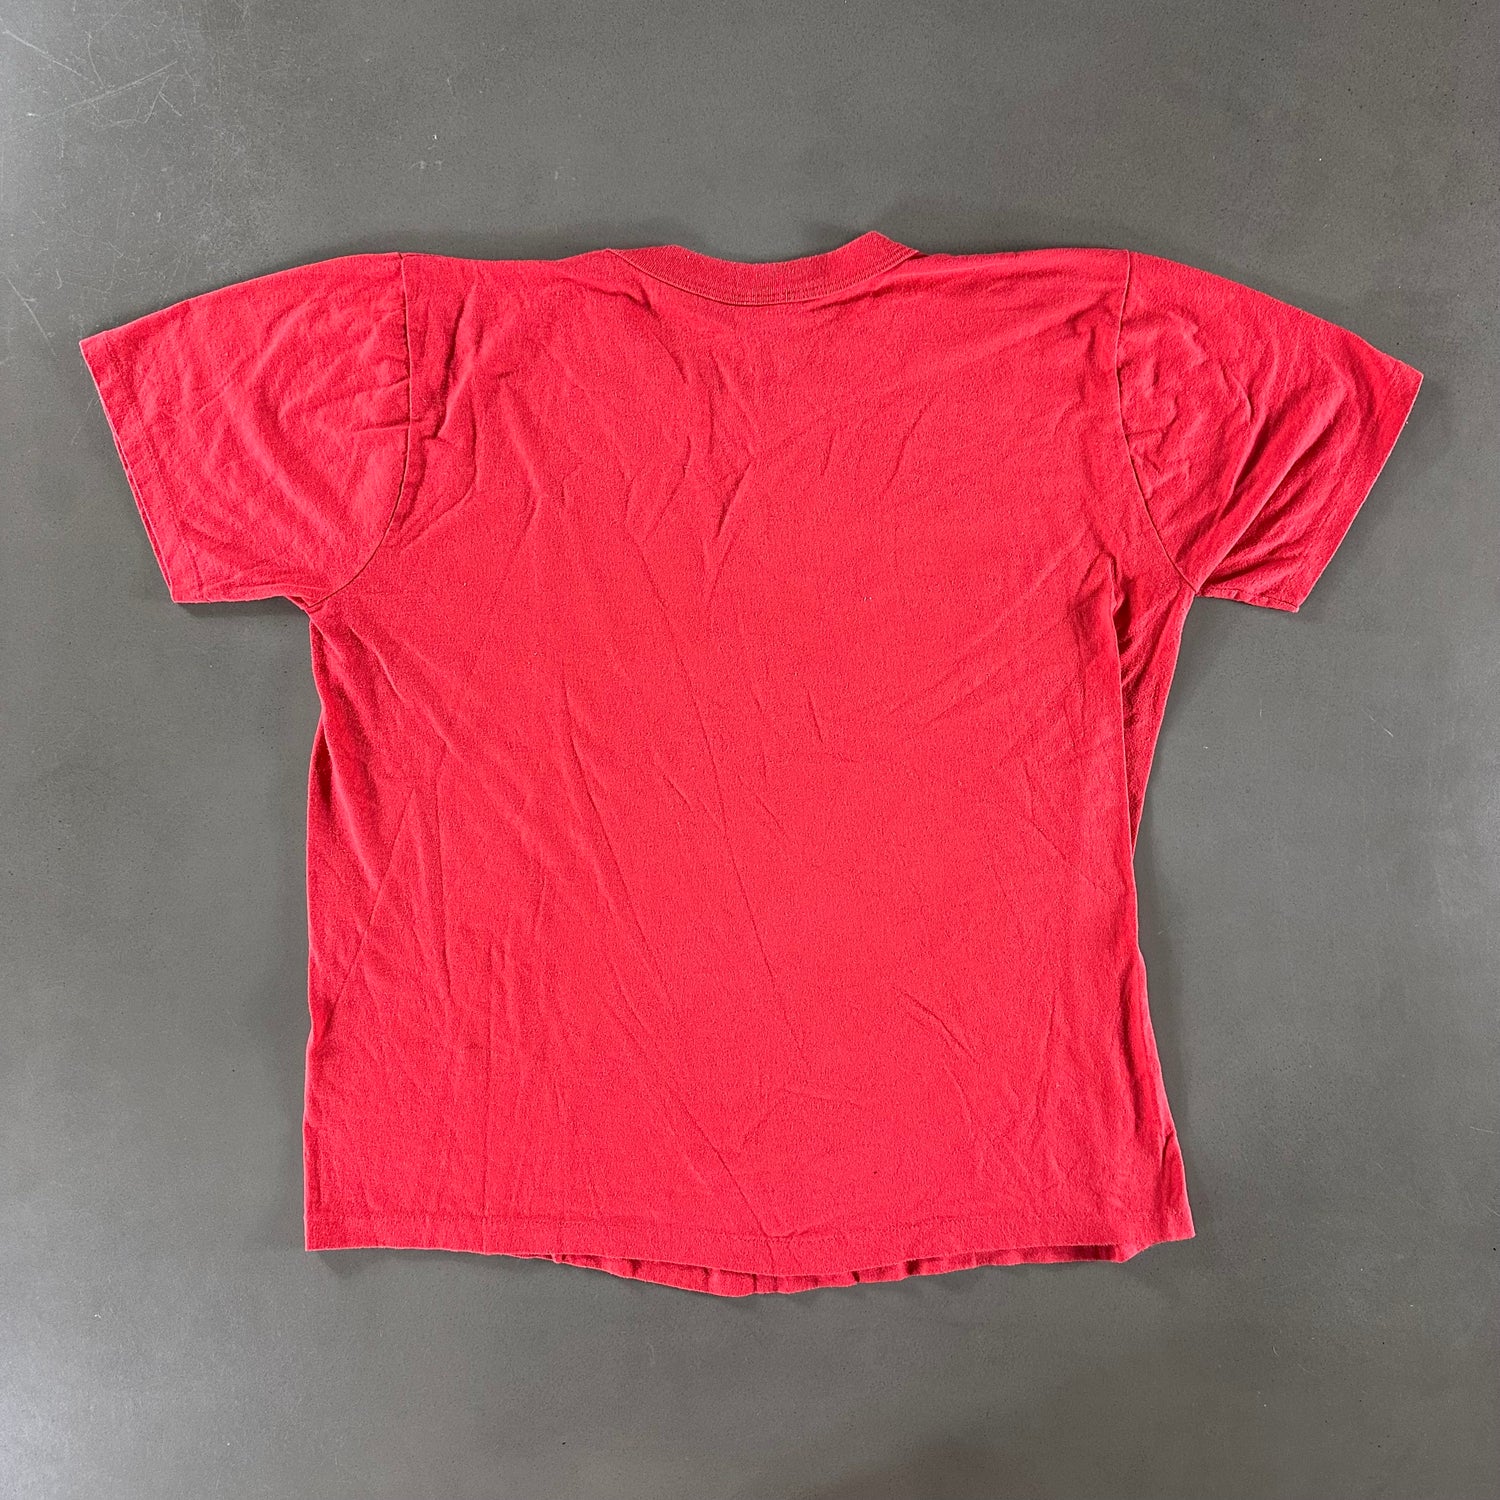 Vintage 1980s Canada T-shirt size XL